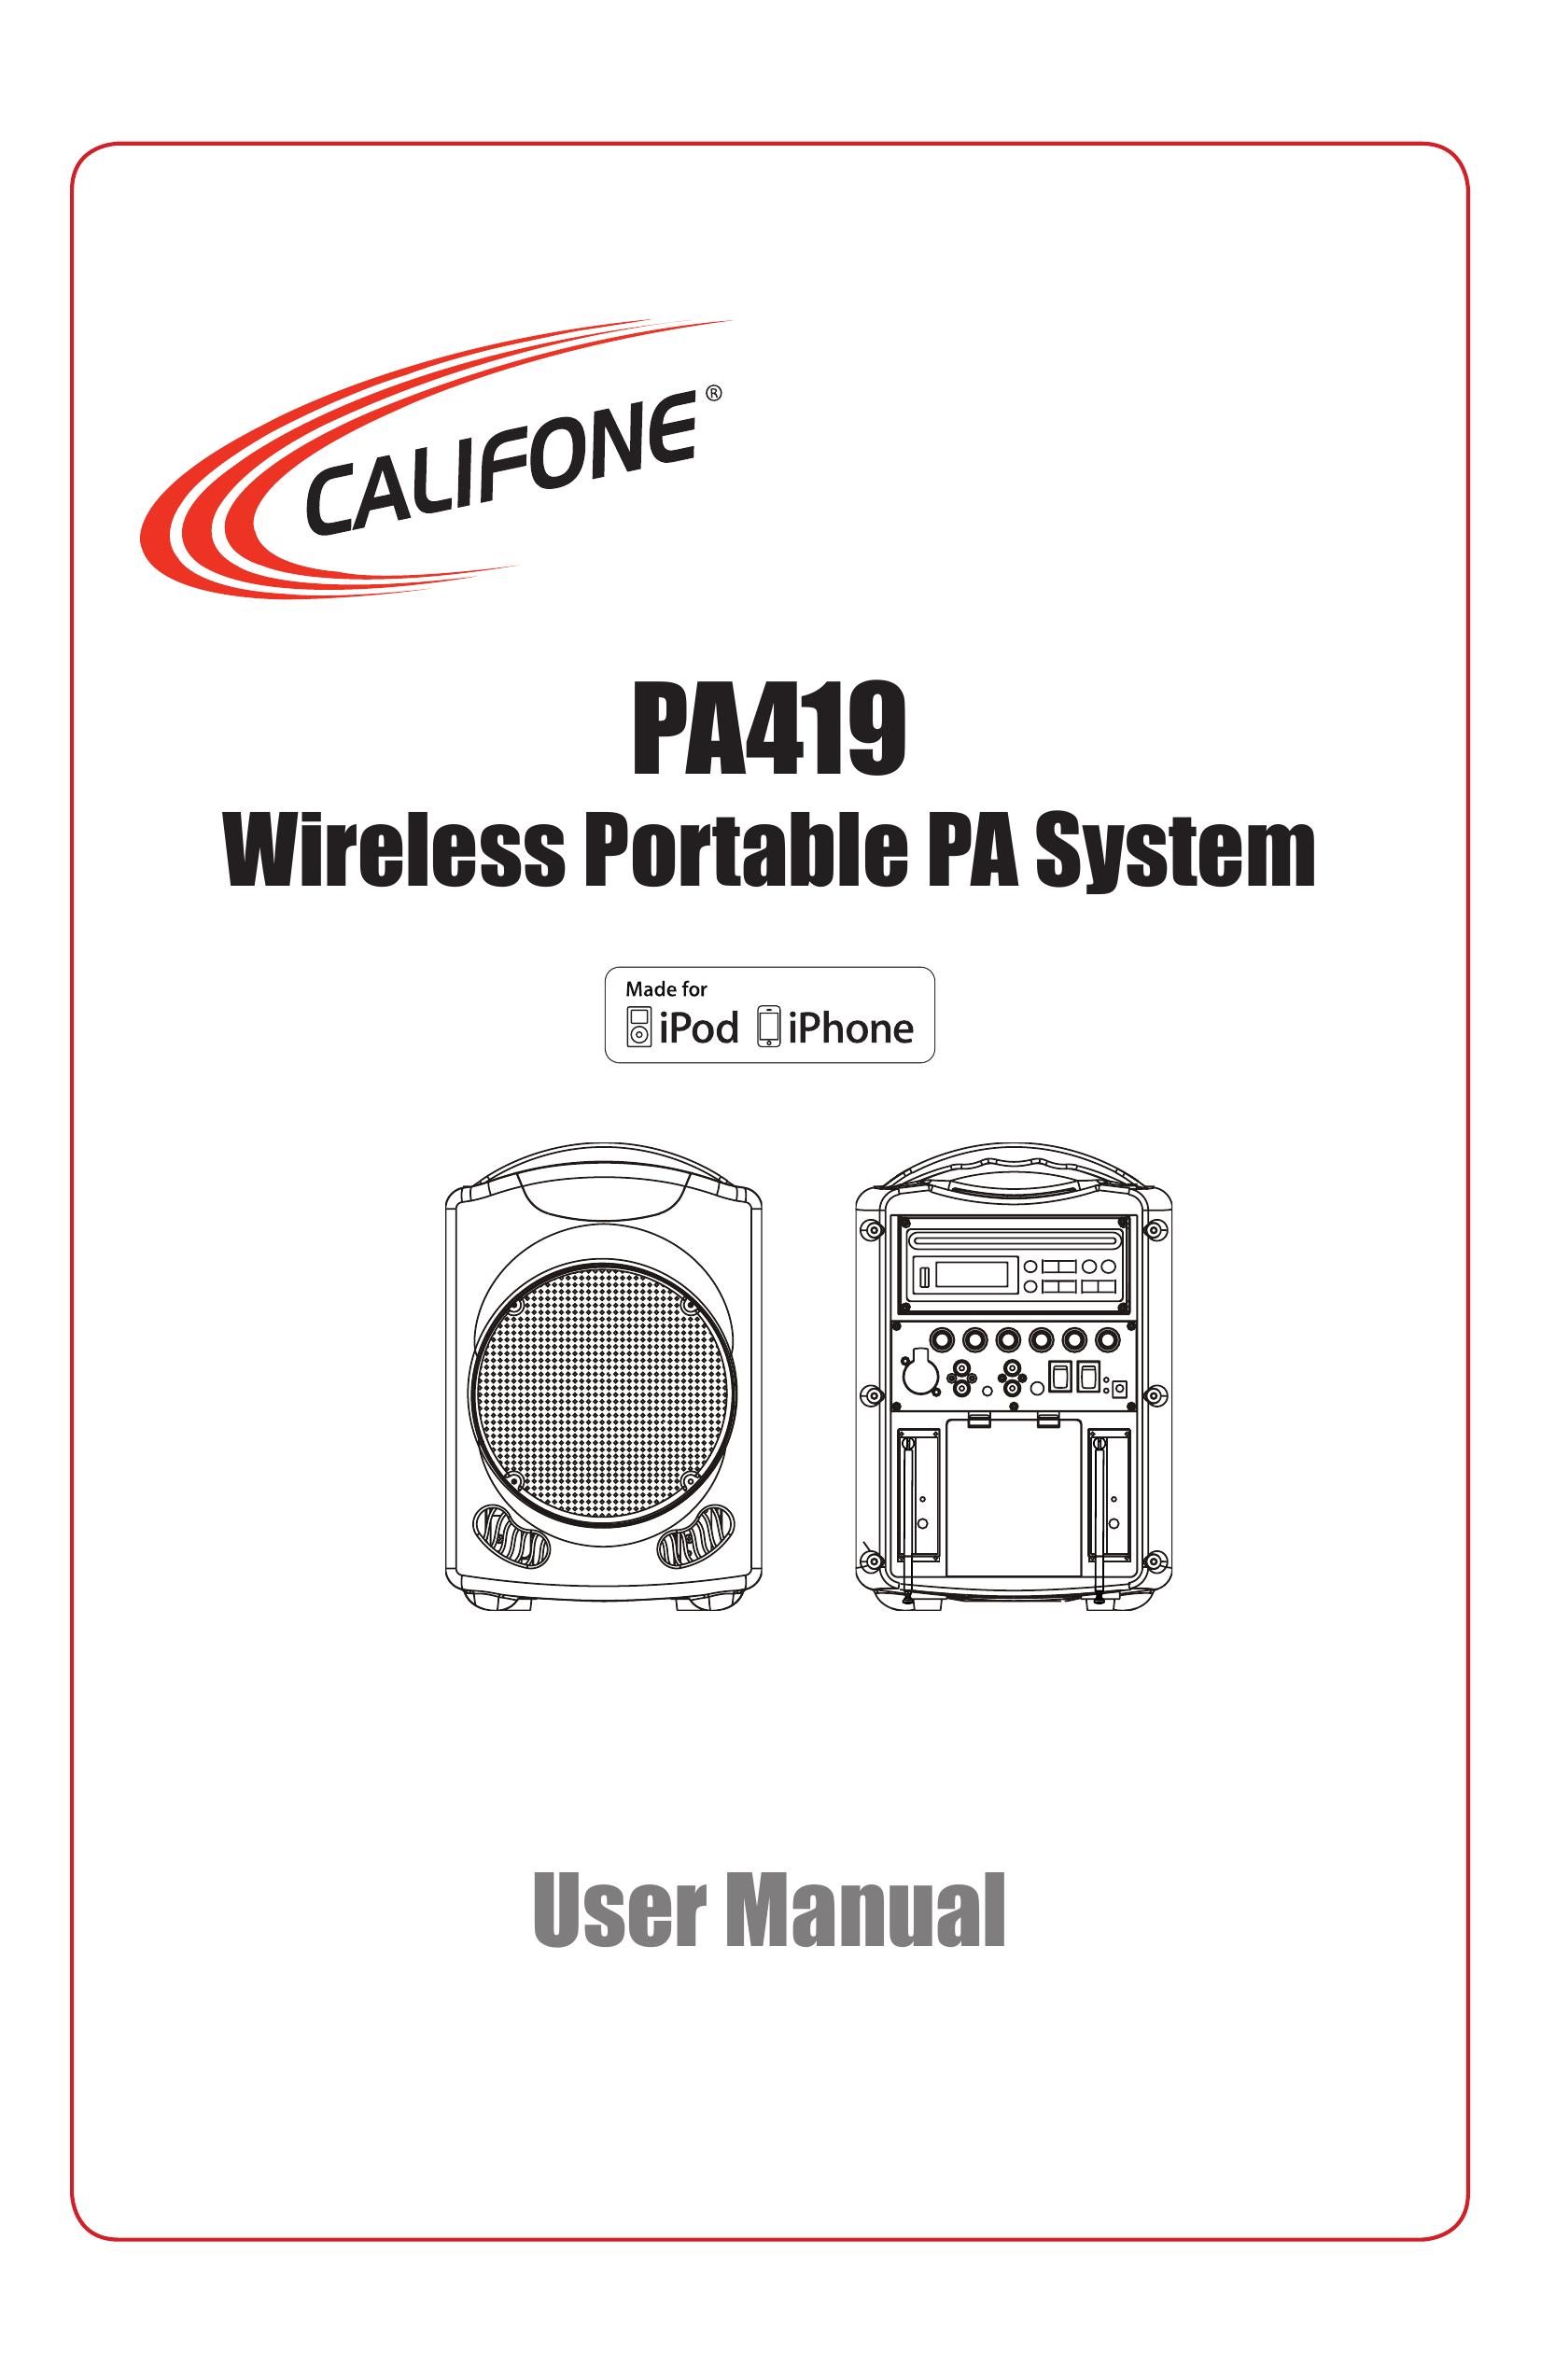 Califone PA419 DJ Equipment User Manual